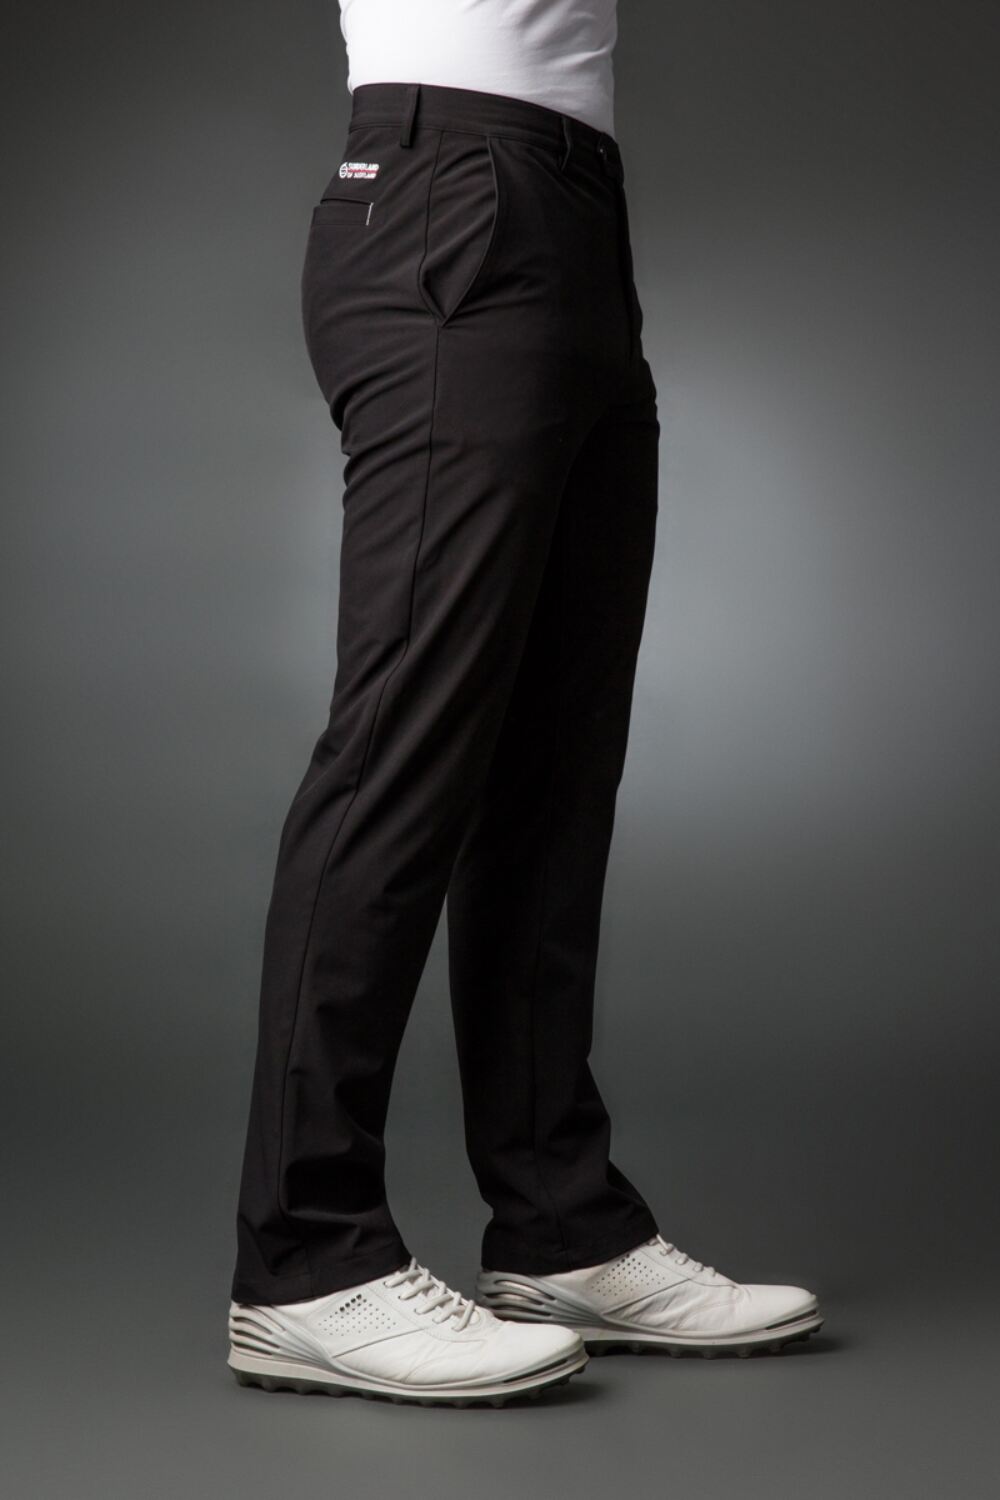 SUNDERLAND Morzine Technical Lightweight Showerproof Golf Trousers - Mens - Black